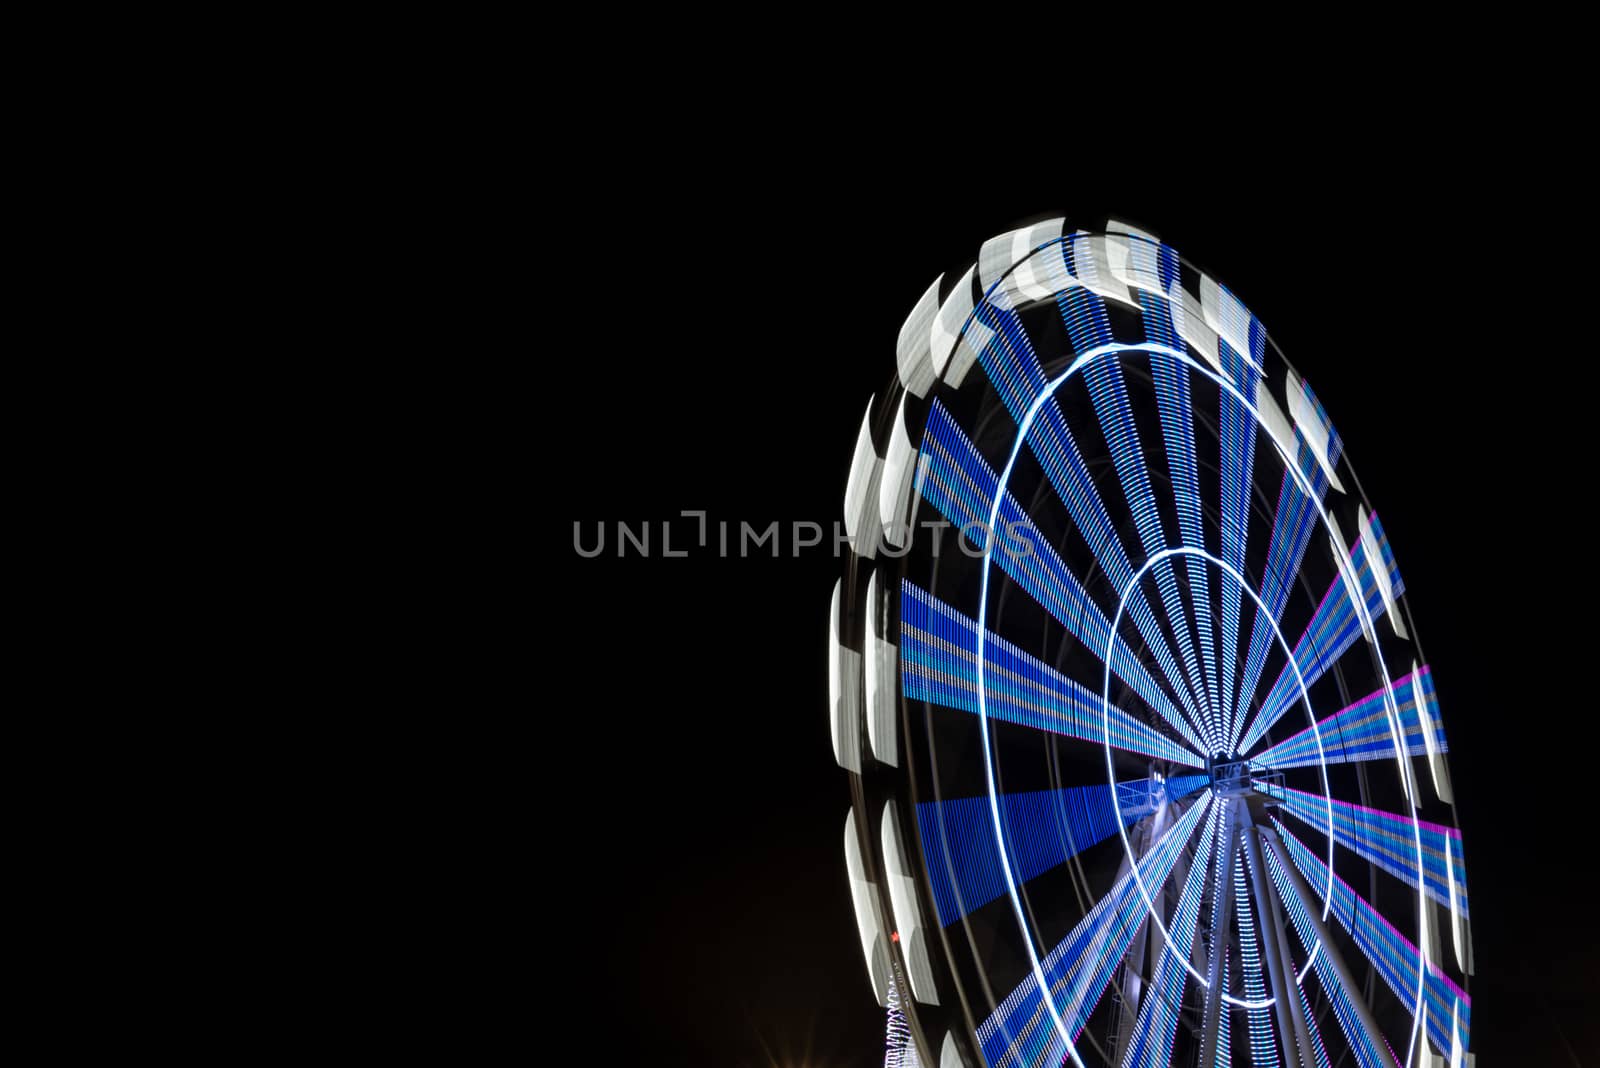 Long exposure of ferris wheel illuminated at night by marynkin